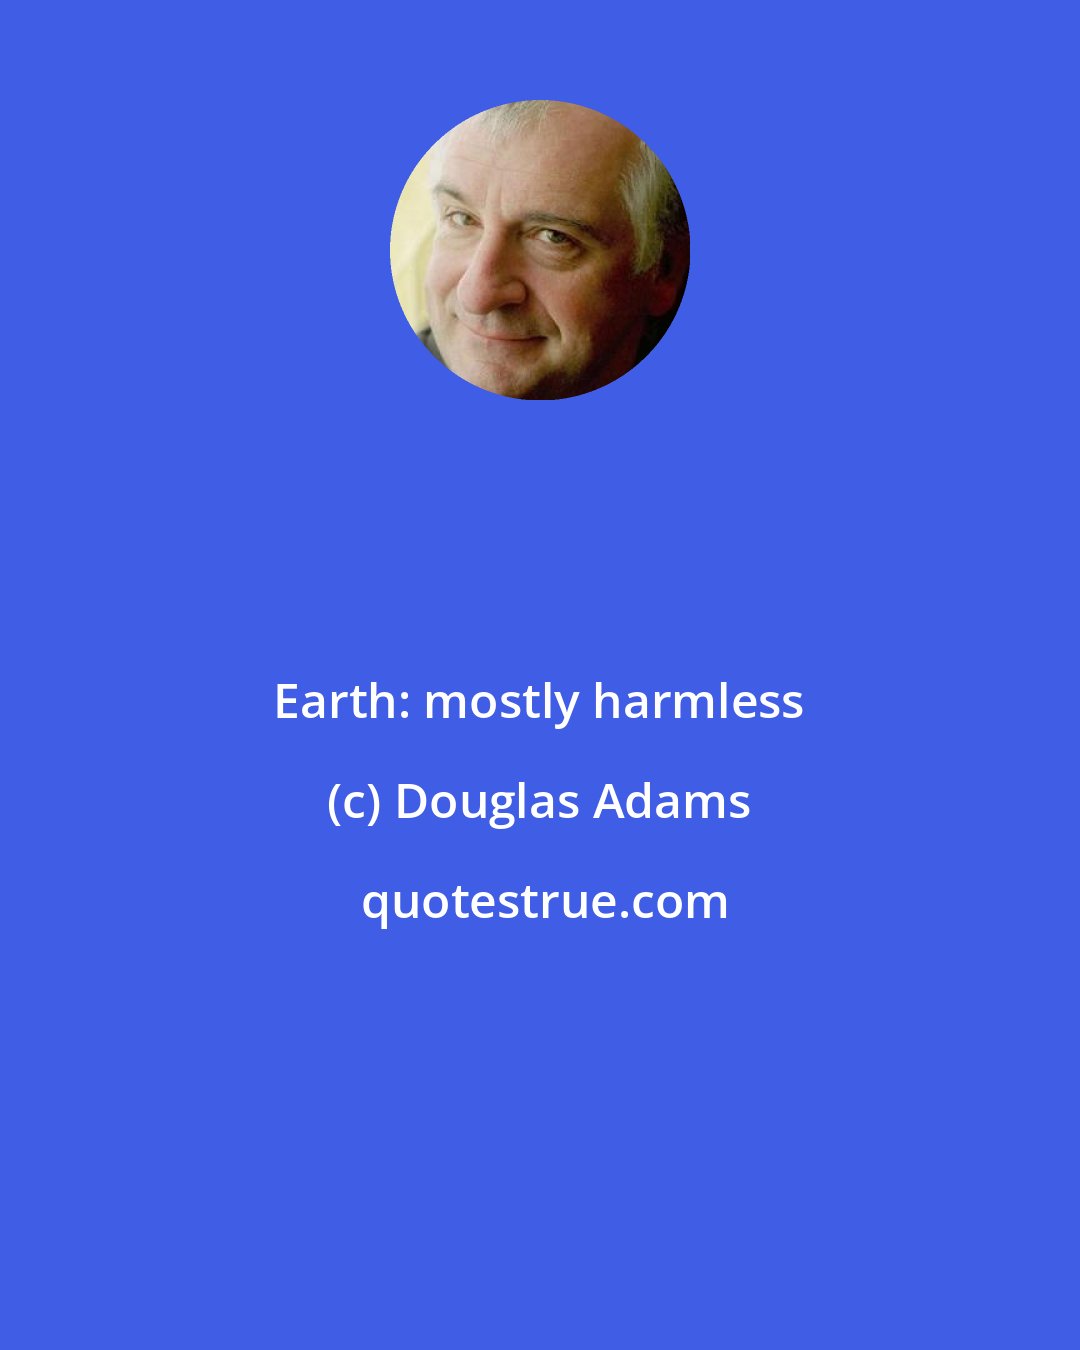 Douglas Adams: Earth: mostly harmless